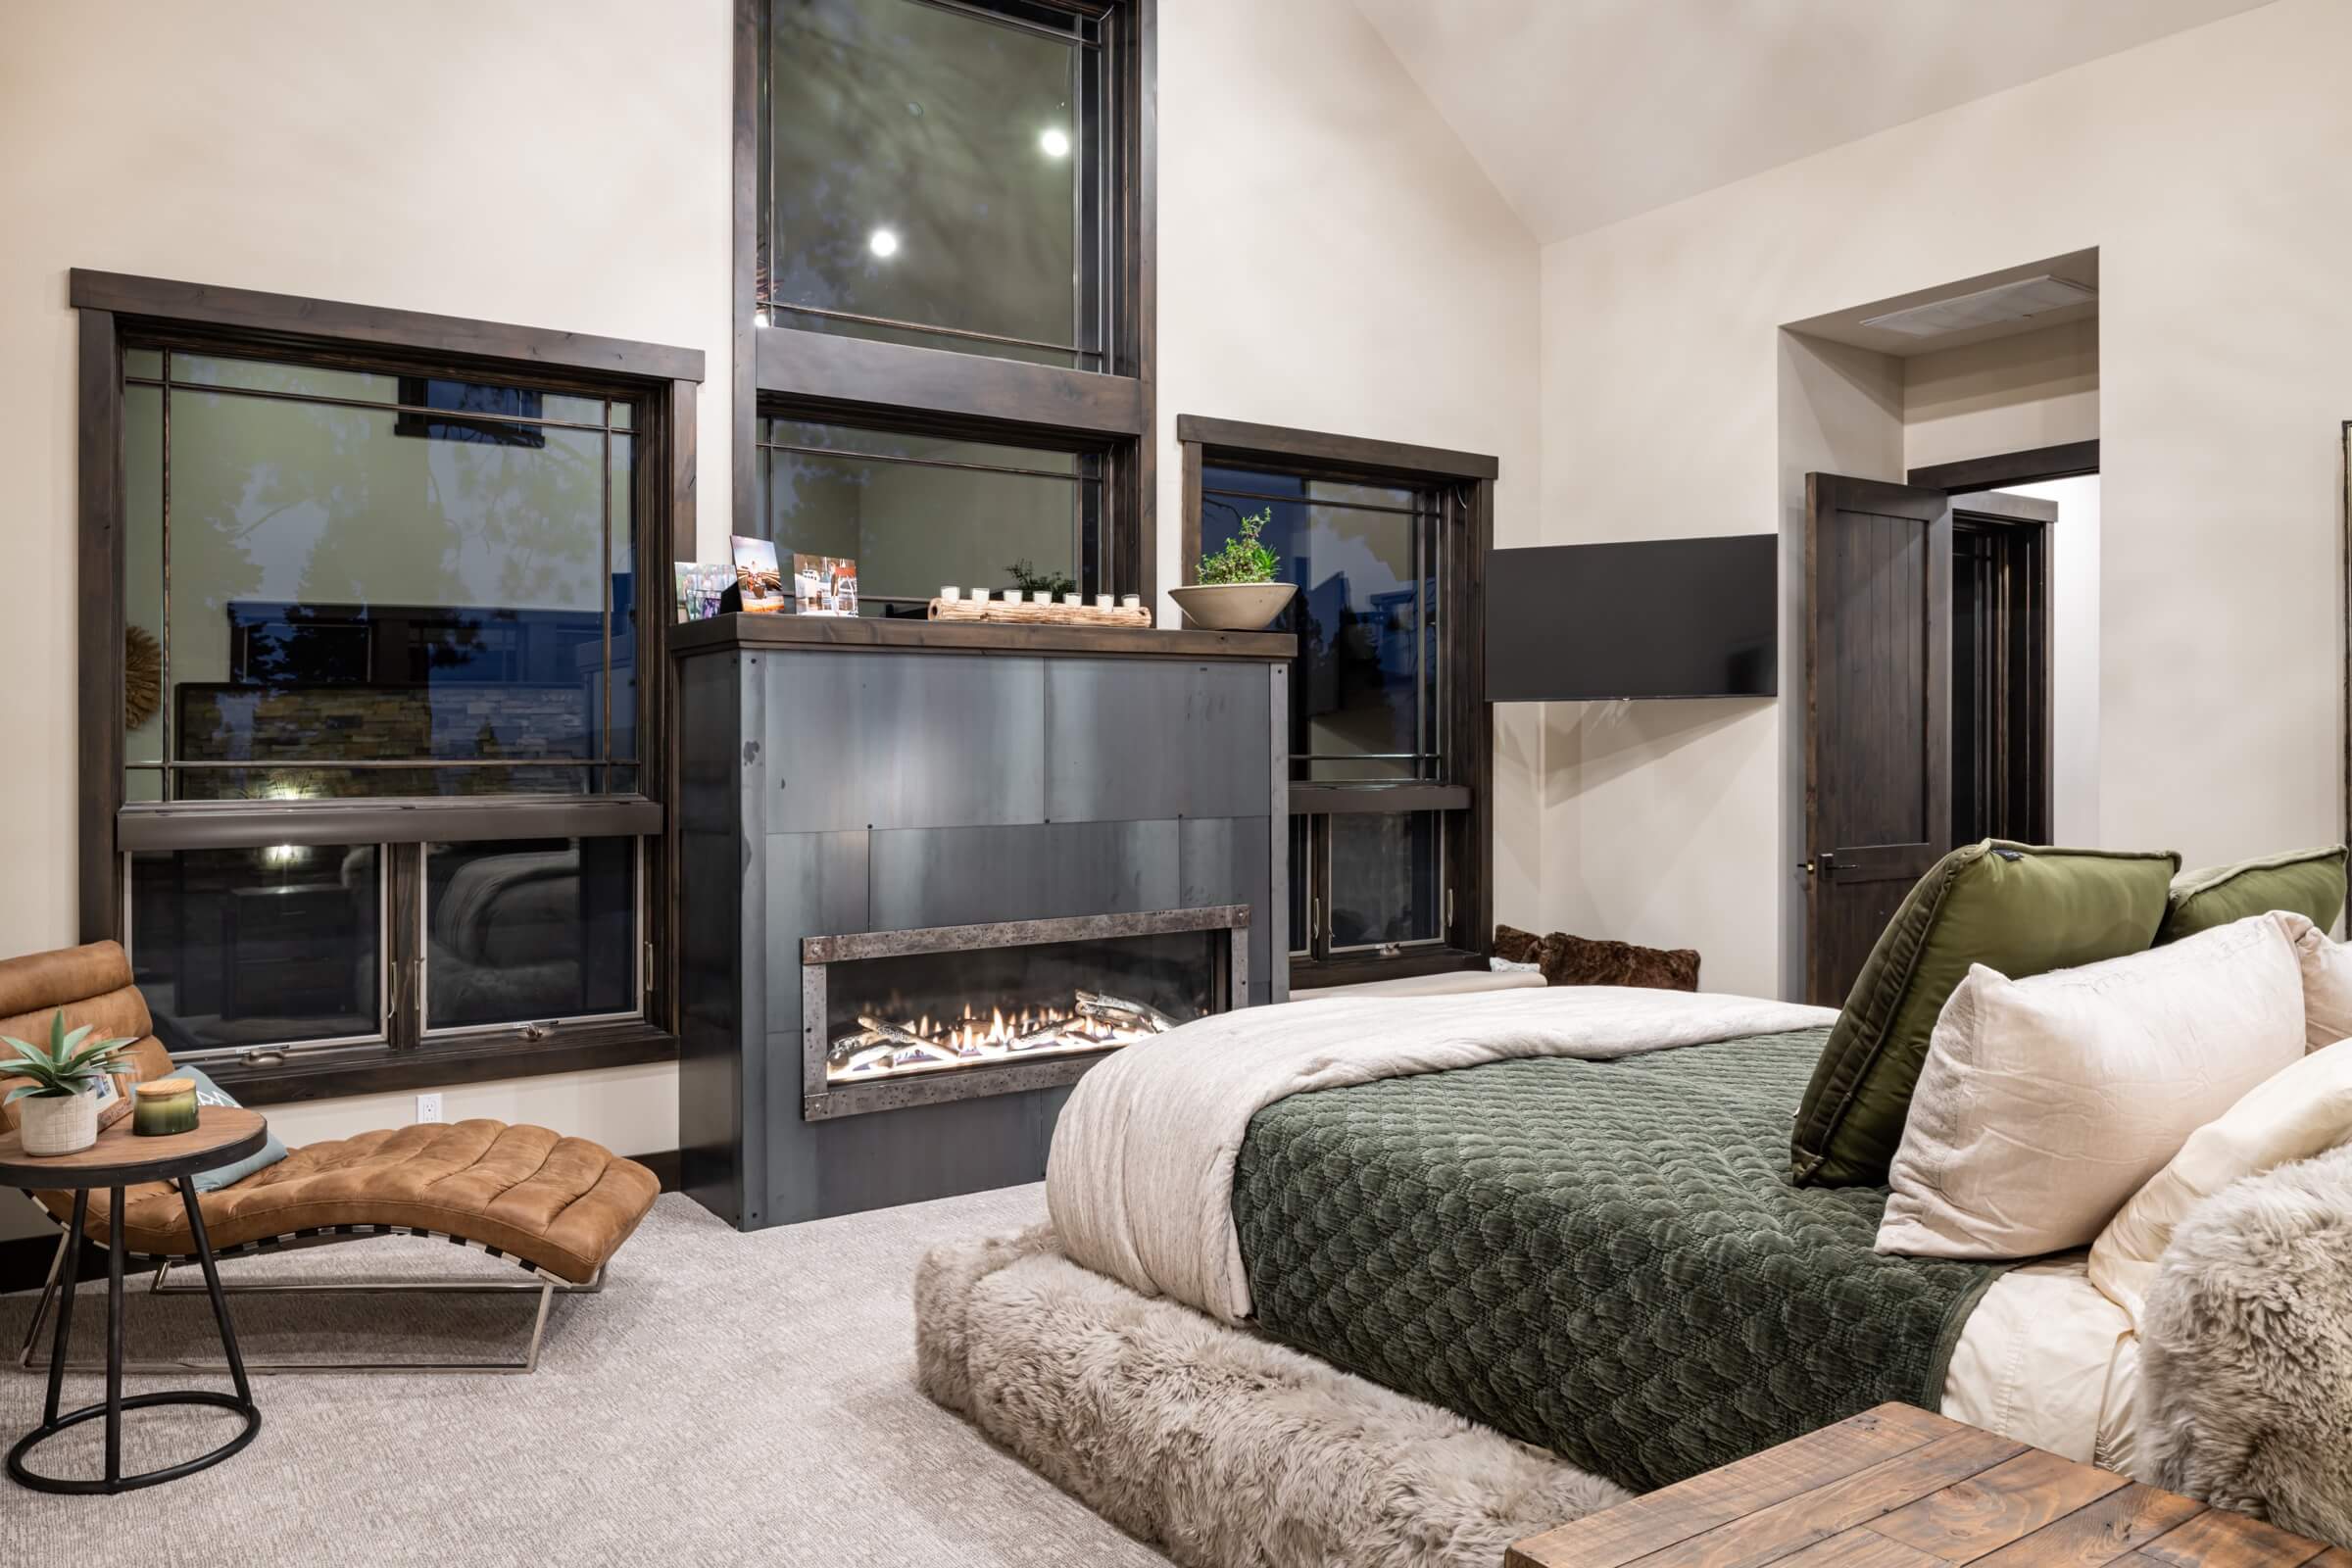 Rustic bedroom design from FiveWest